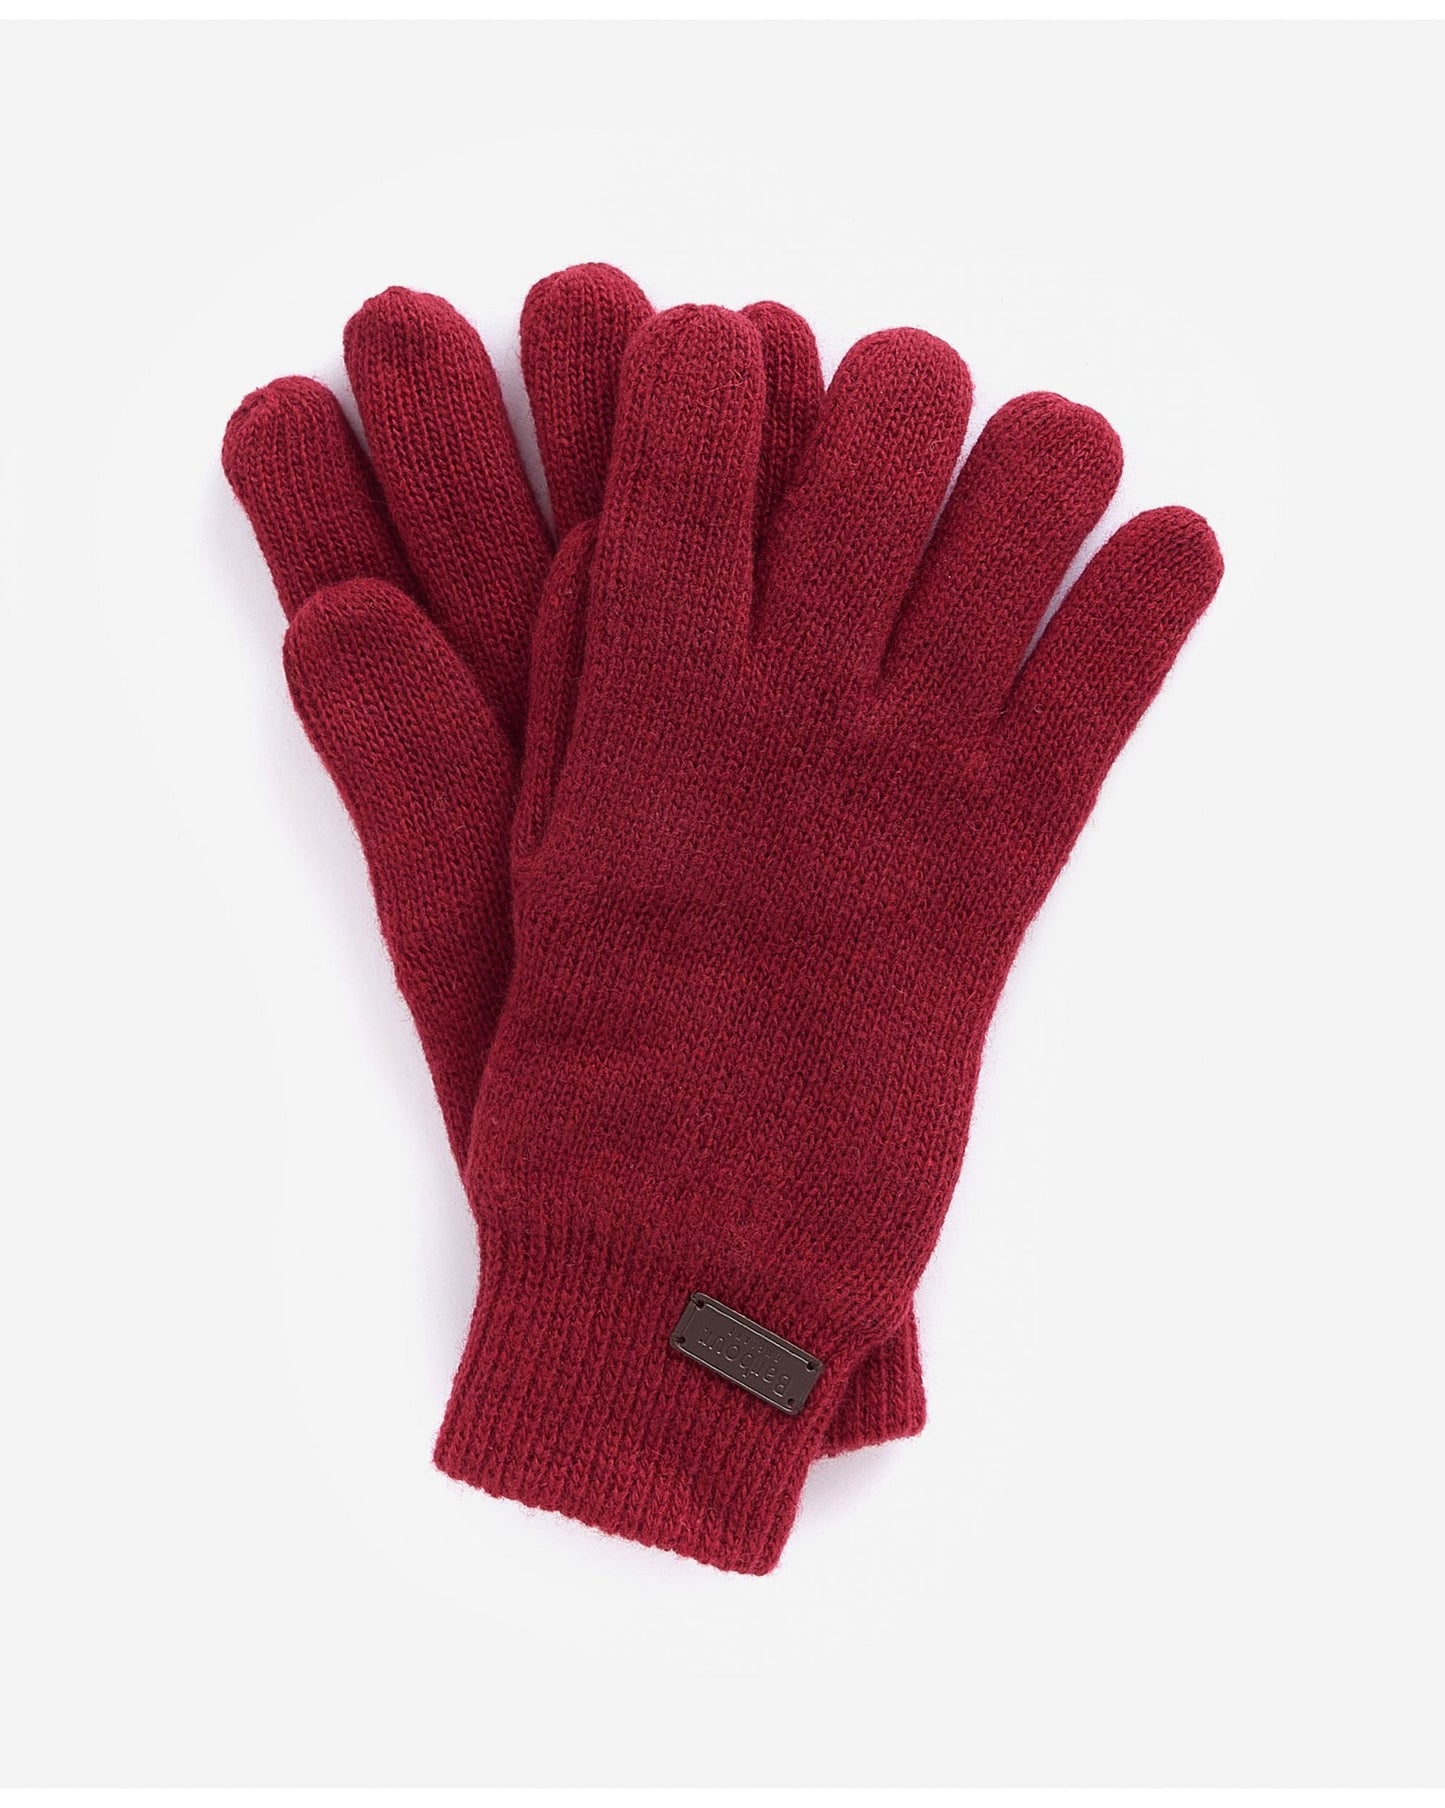 Carlton Gloves